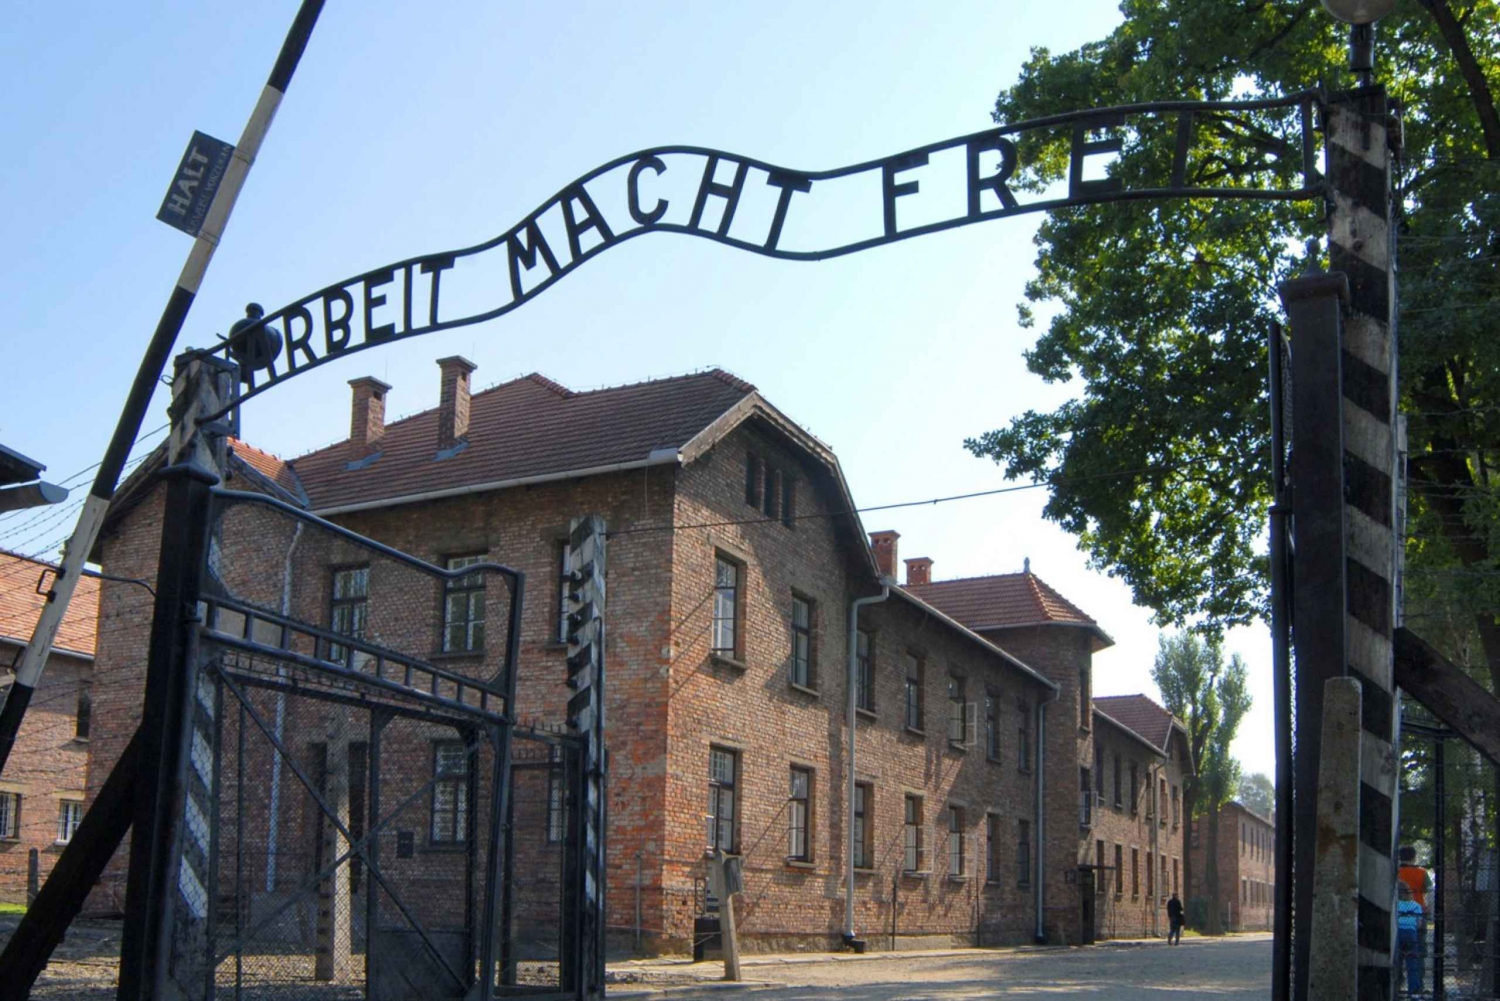 De Cracóvia: Auschwitz-Birkenau Tour